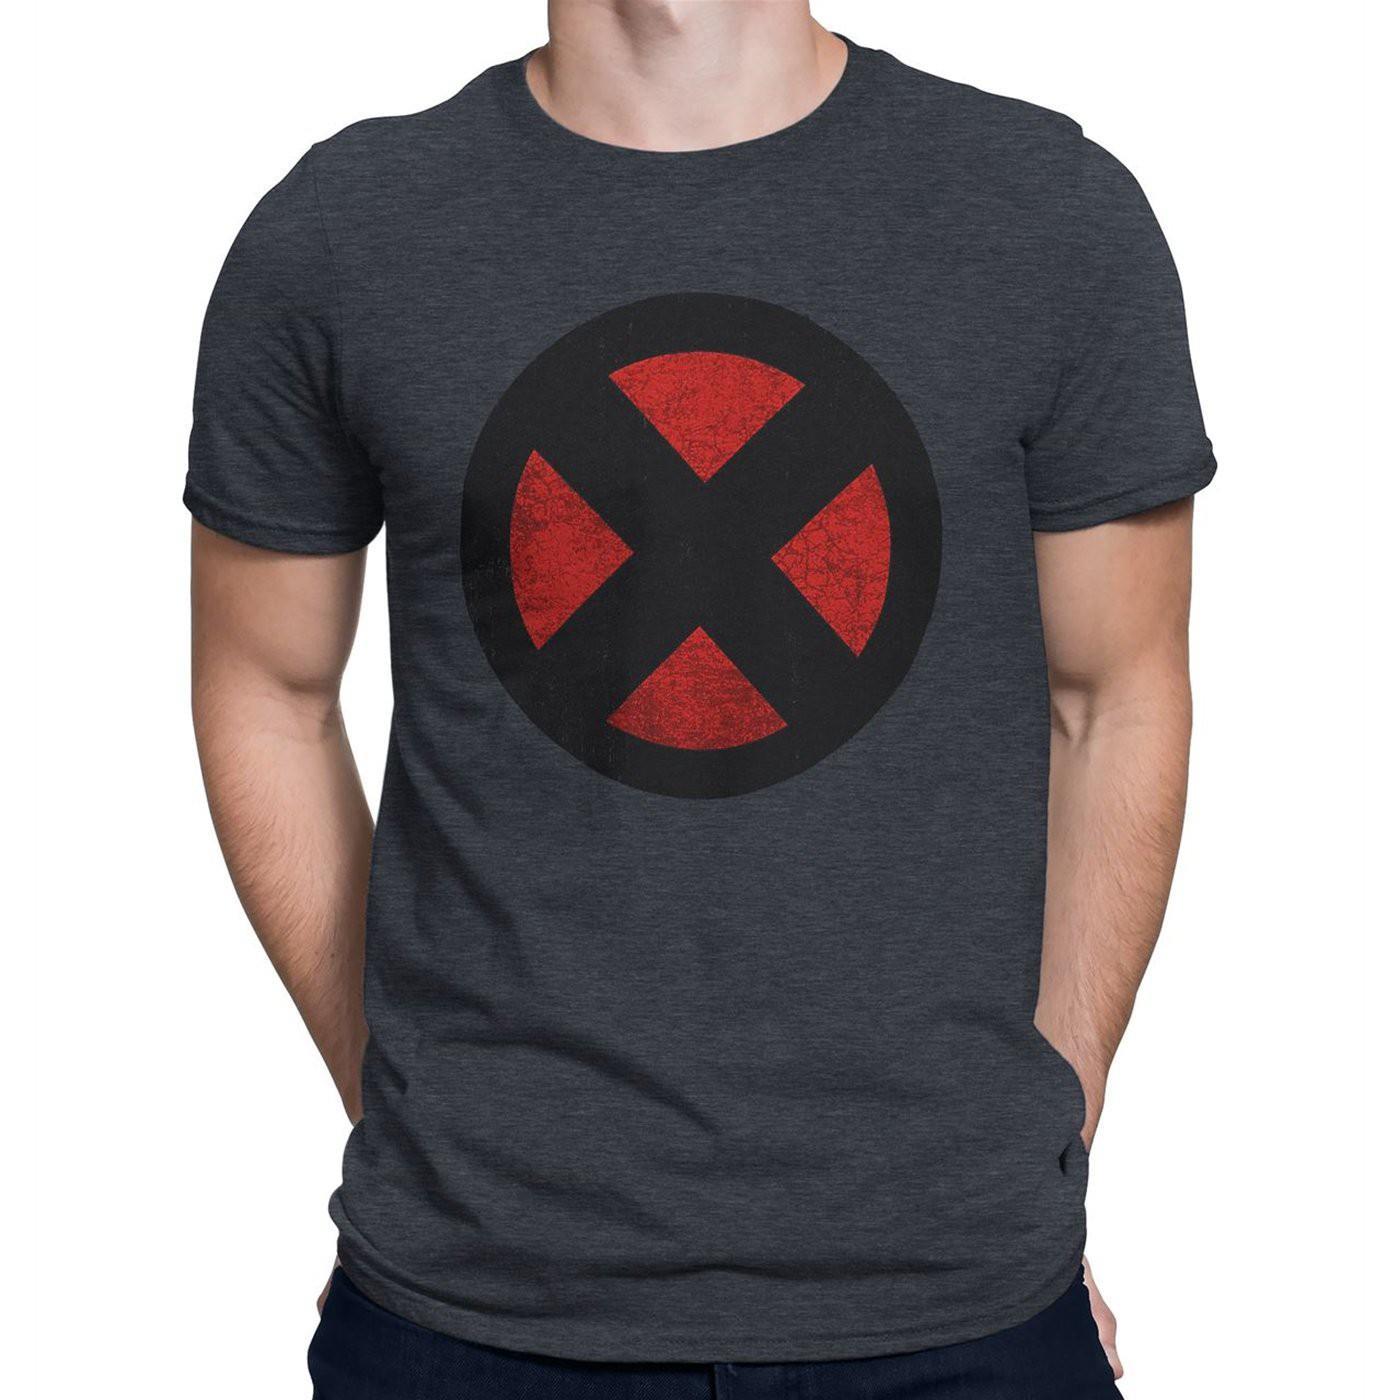 X-Men Distressed Symbol Grey T-Shirt Small